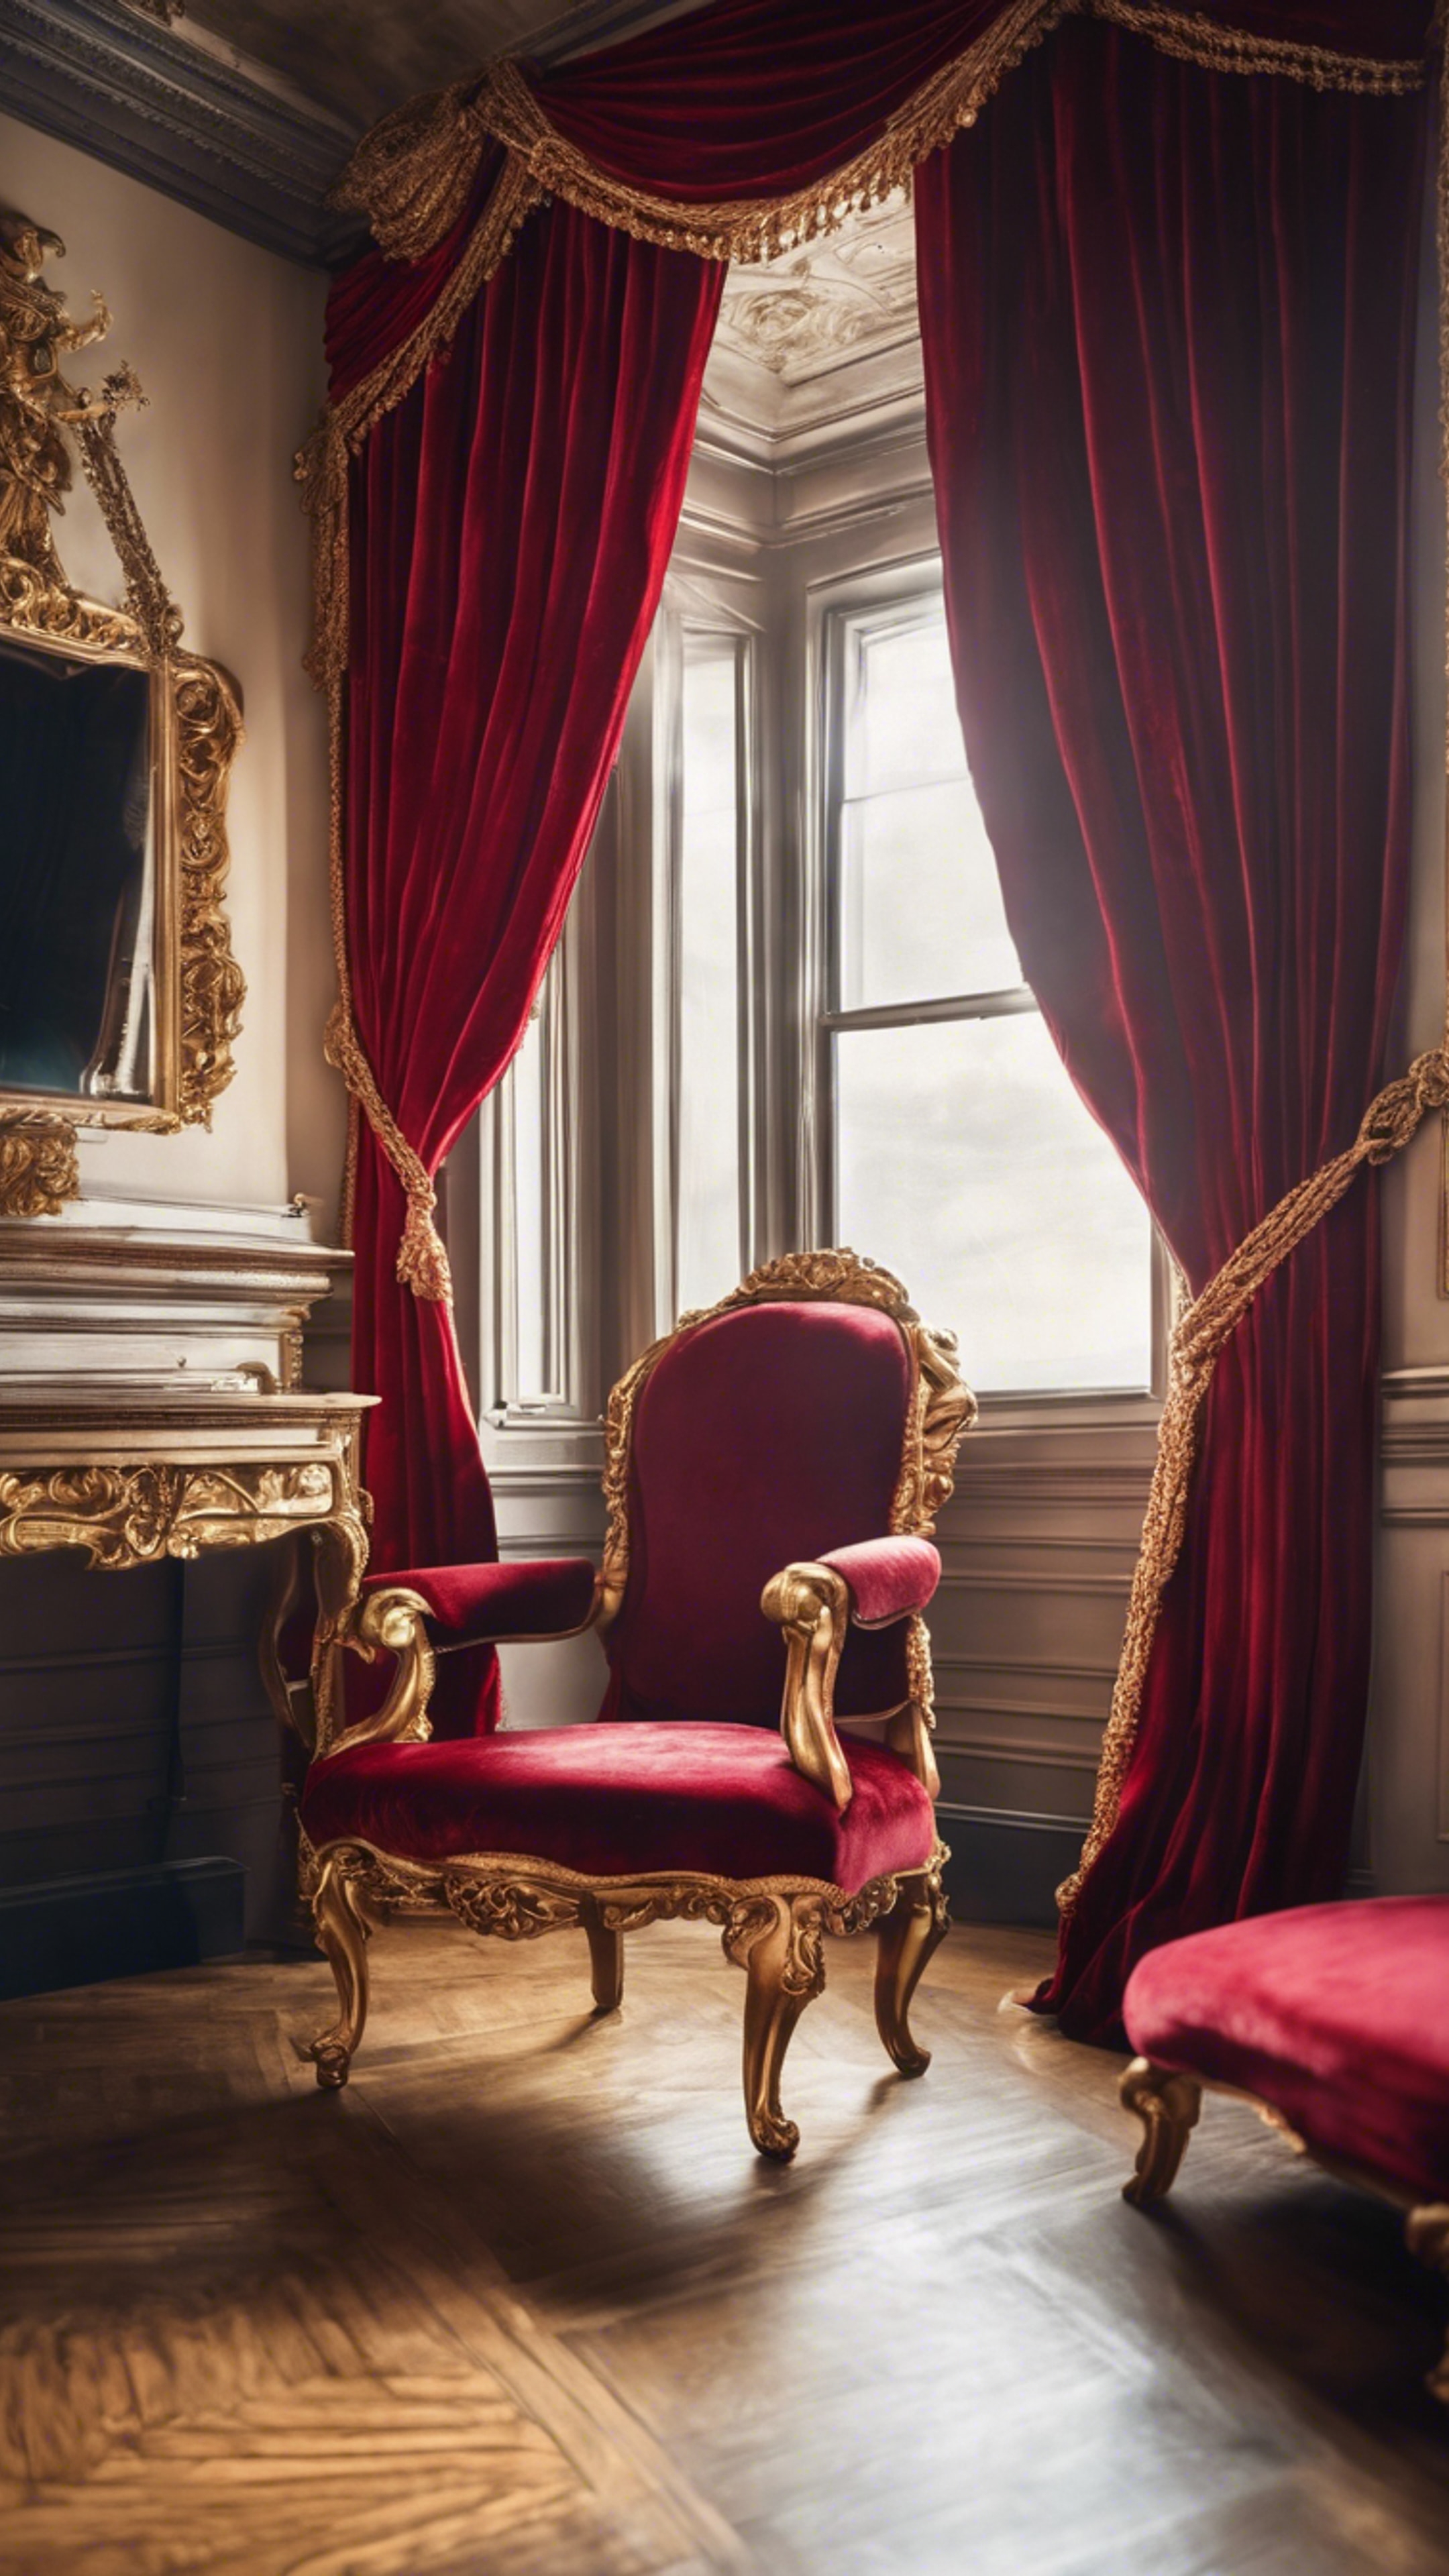 Red velvet drapes tied back with gold ropes in a grand victorian-style living room. duvar kağıdı[6c8dd2a9b4f74c0eb869]